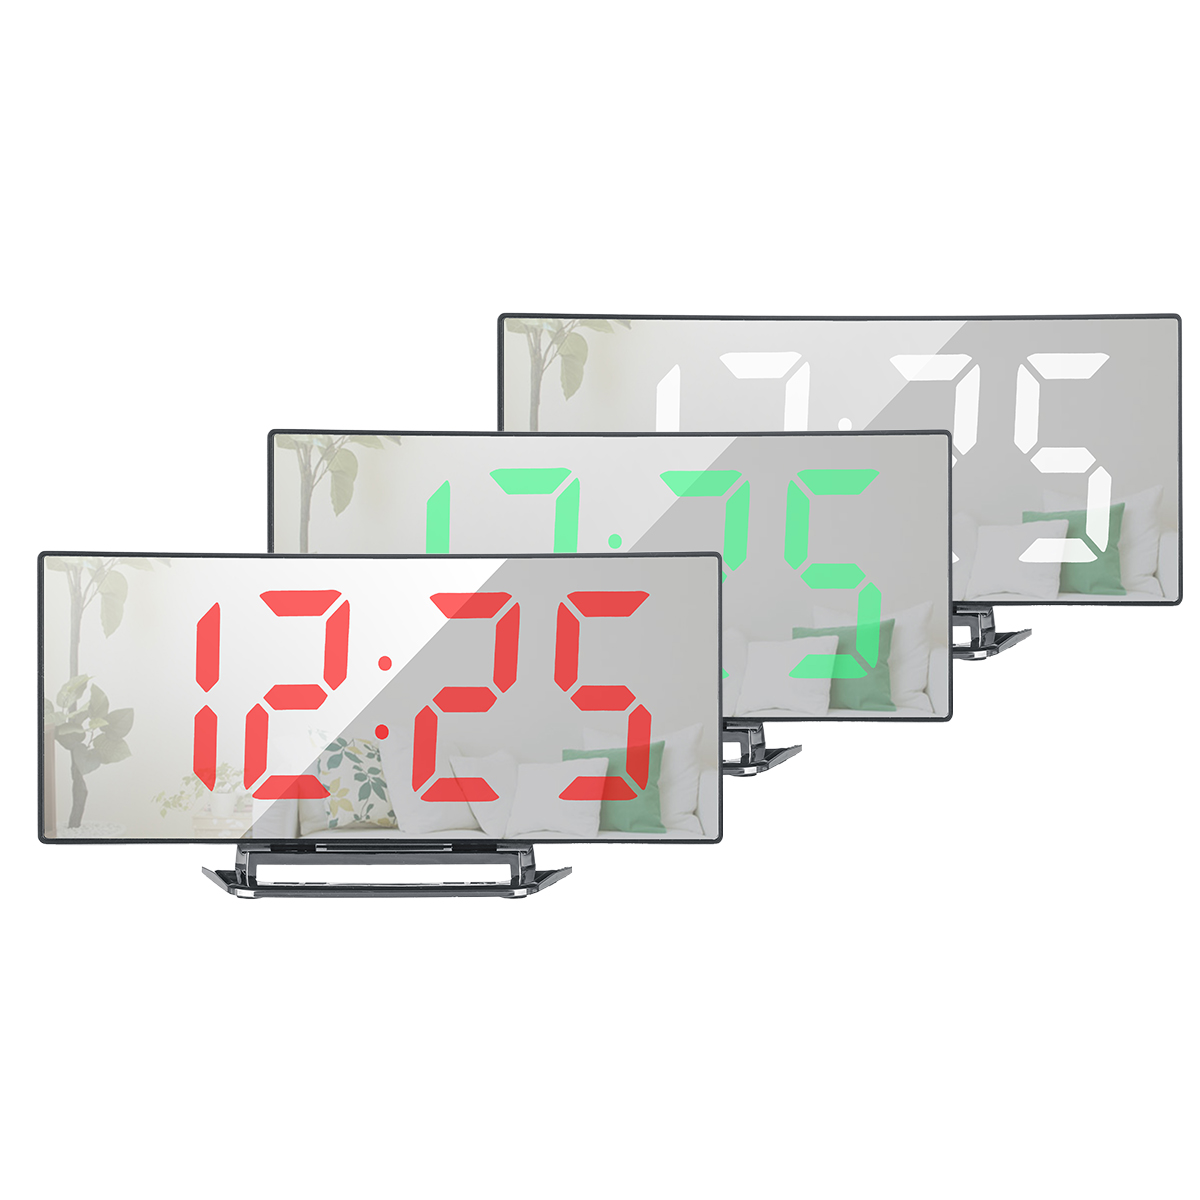 Curved-LED-Digital-Alarm-Clock-Mirror-Table-Display-Temperature-Snooze-USB-Room-1639017-2